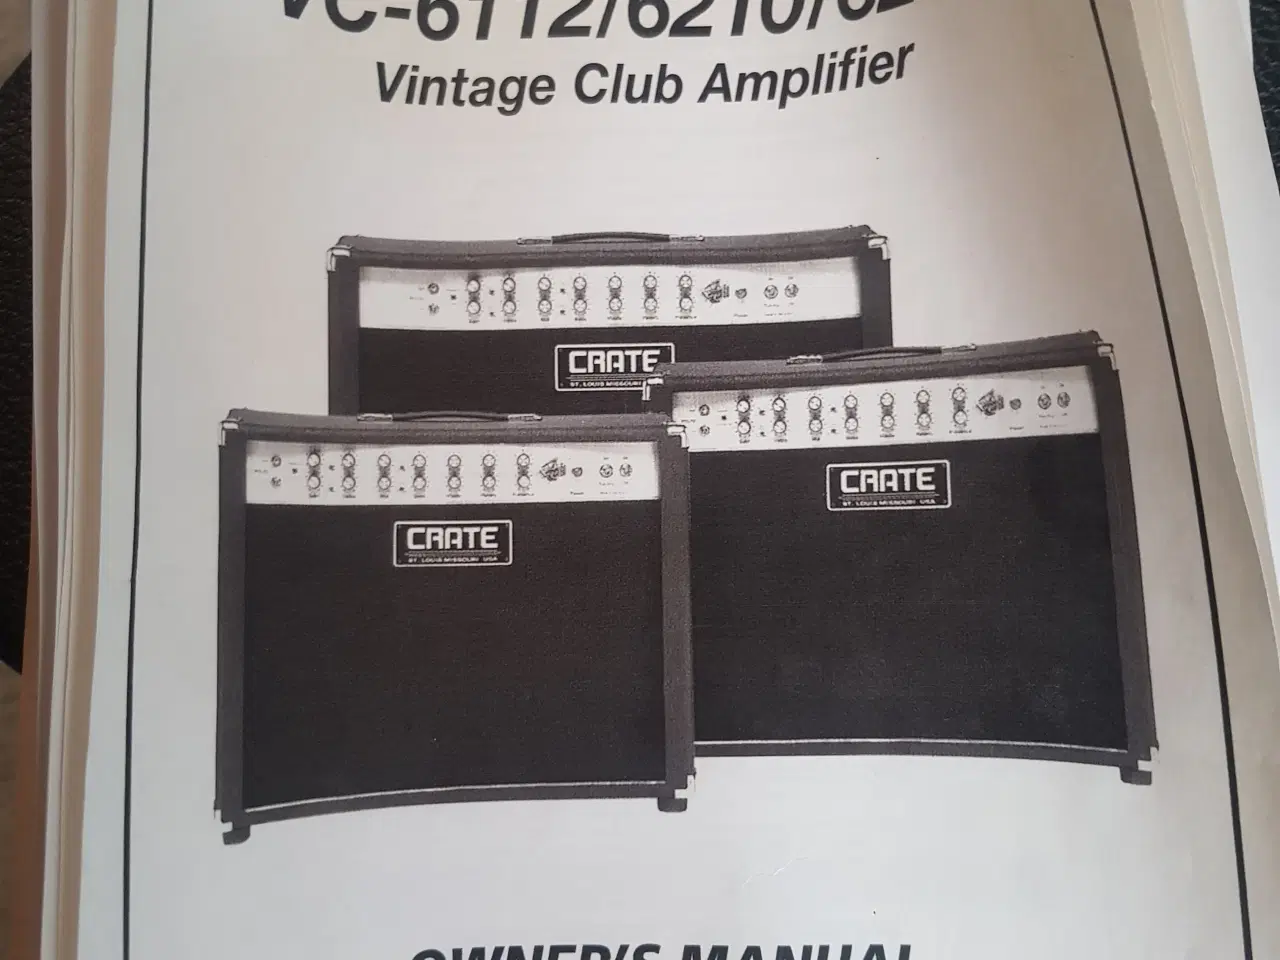 Billede 6 - Guitarcombo, Crate Vintage Club VC 6212, 60 W